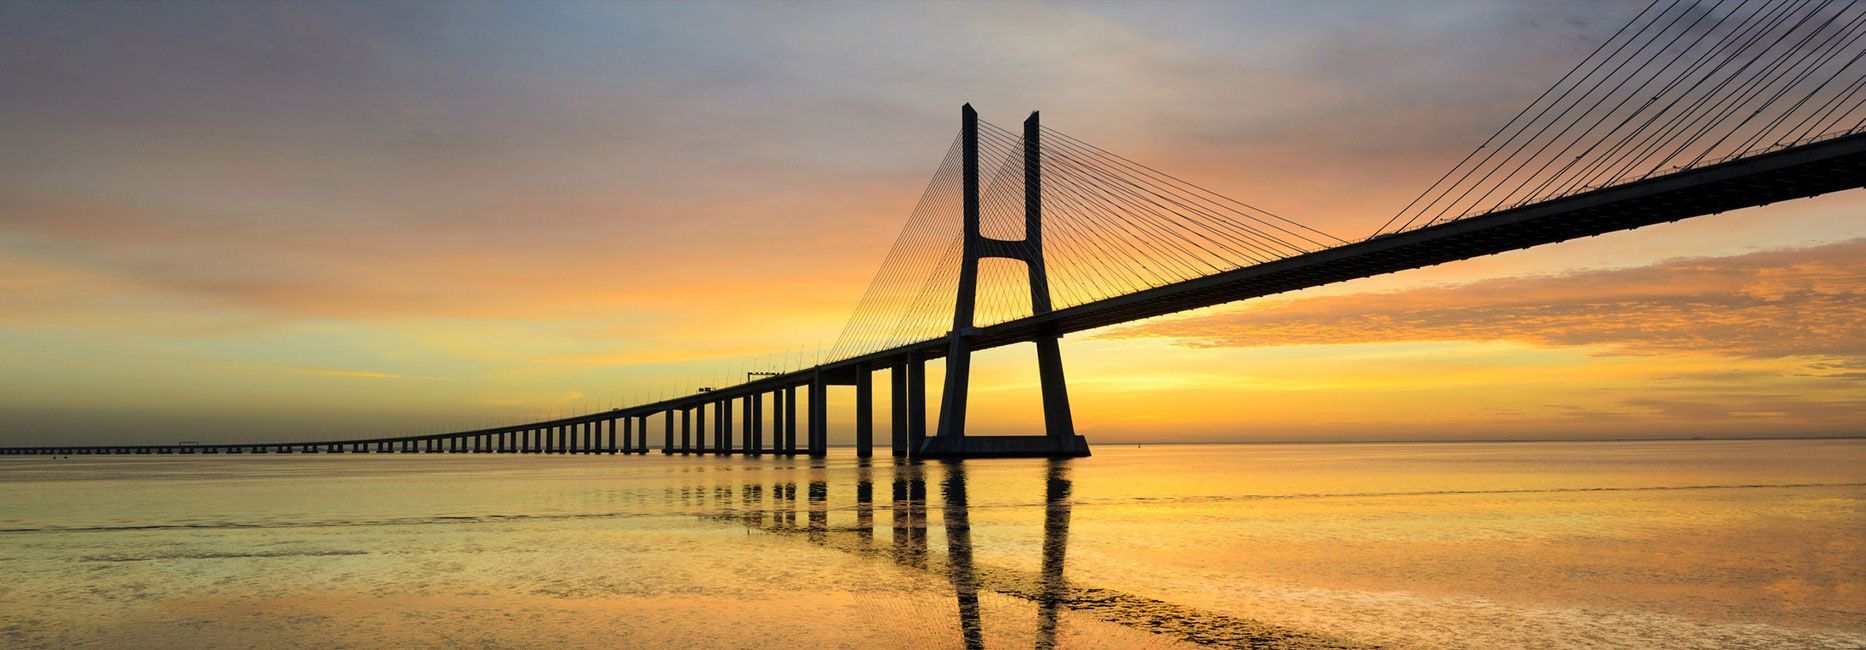 Brücke Mit Sonnenuntergang